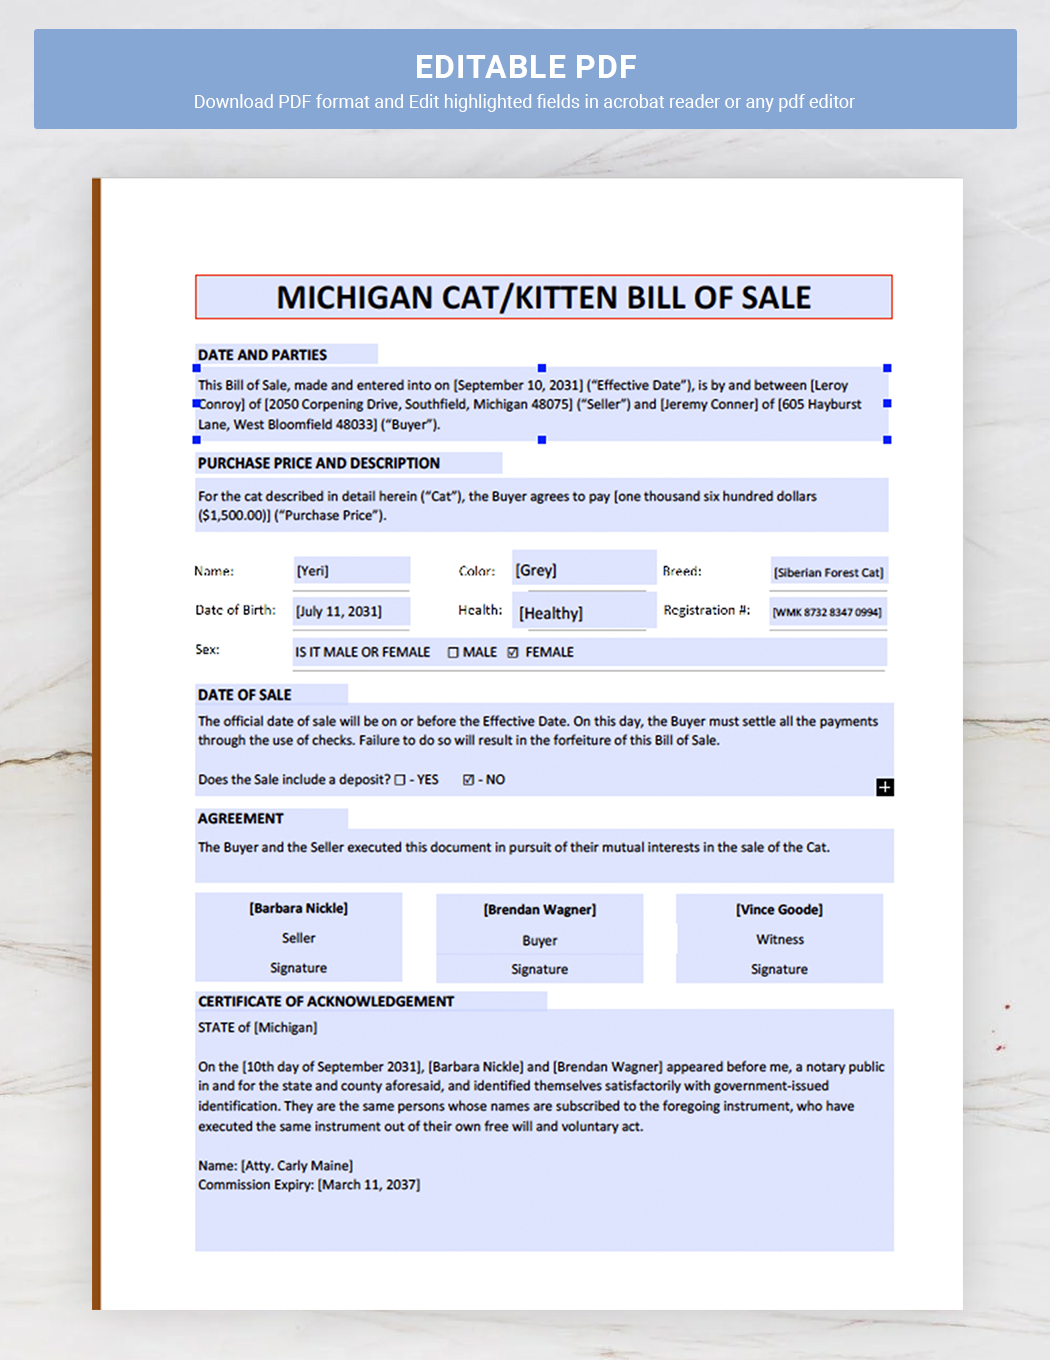 Michigan Cat / Kitten Bill of Sale Template